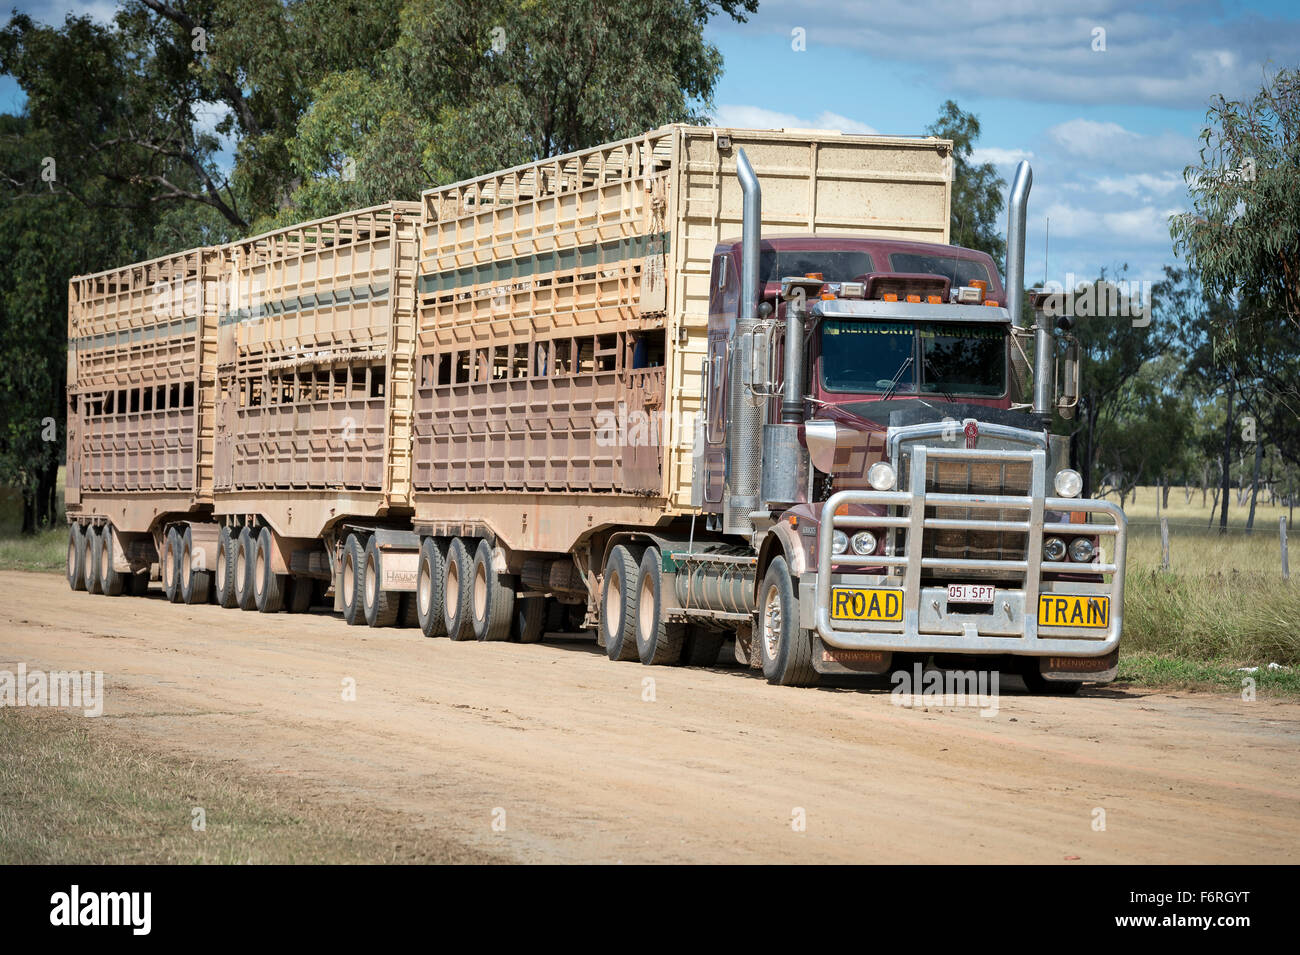 Road train cattle truck in outback Queensland Australia Stock Photo